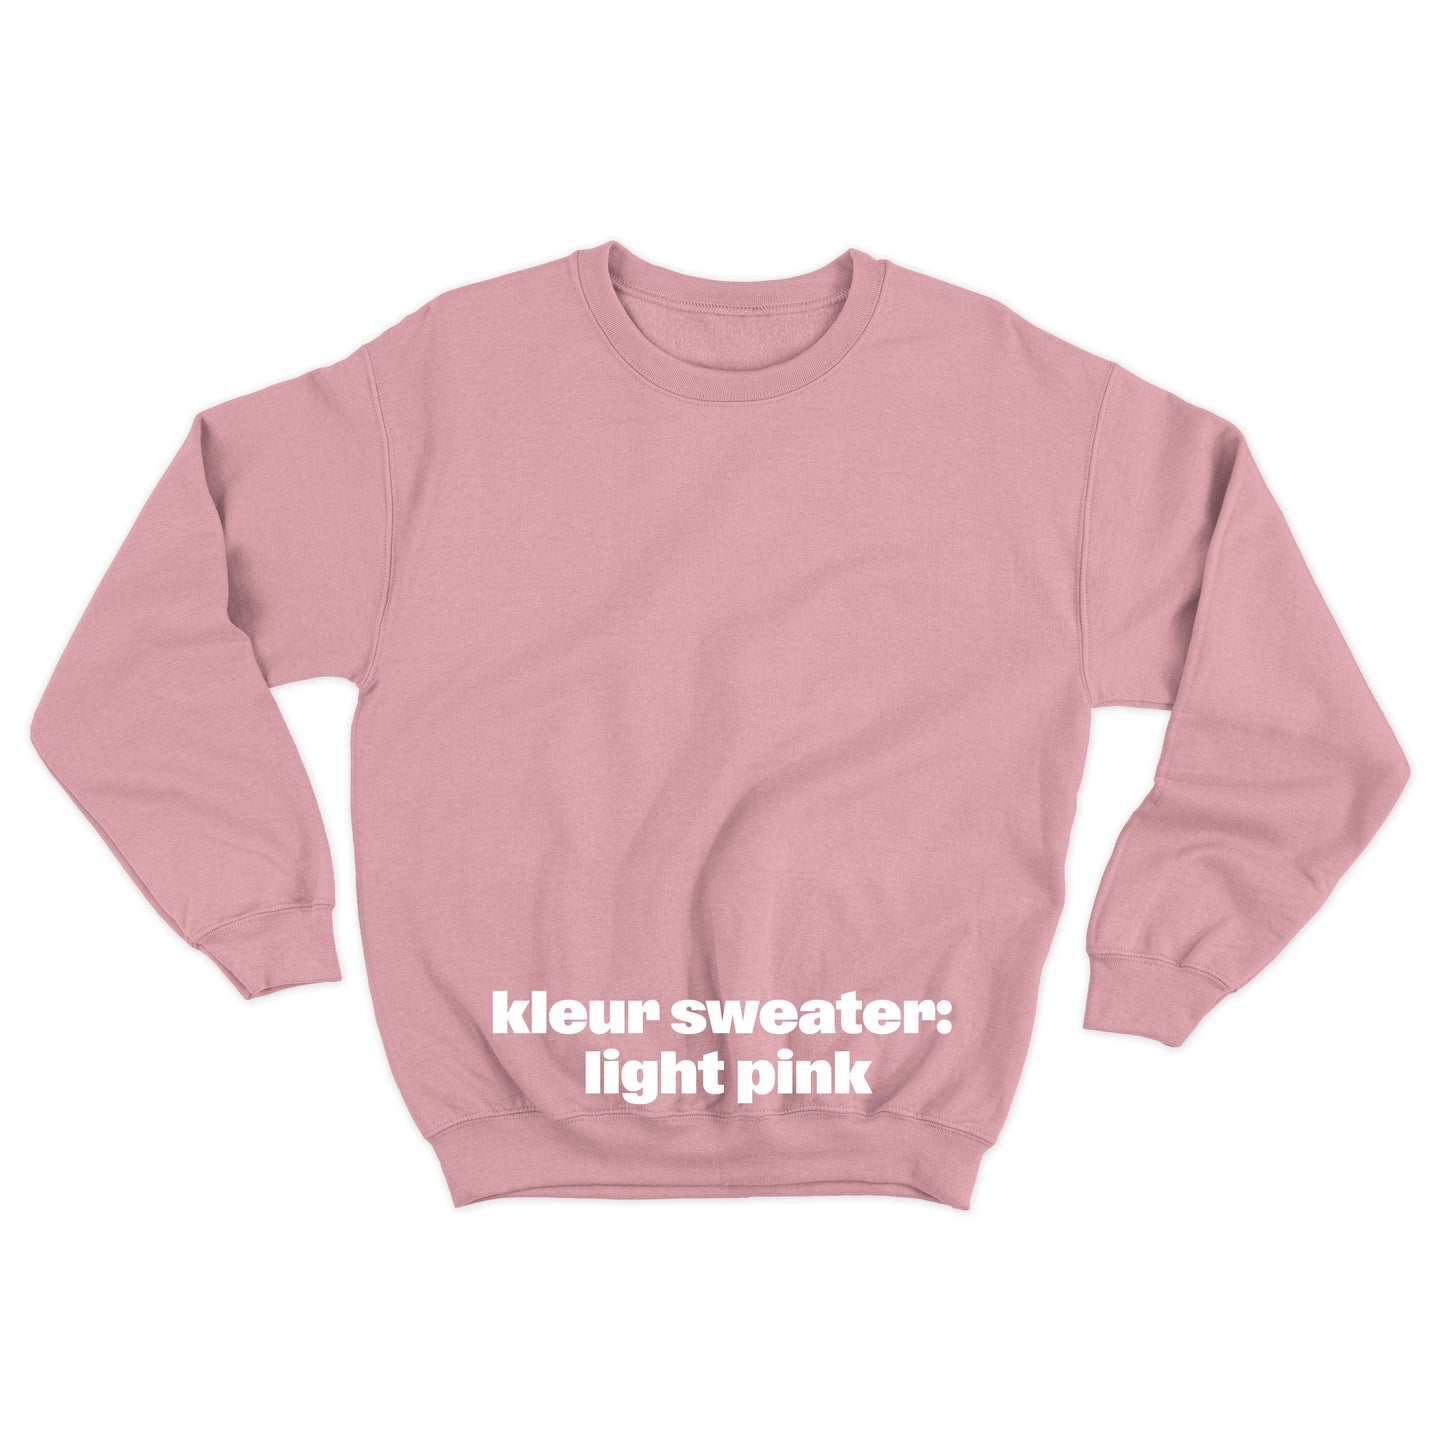 Sweater 'Left of the Dial' • JOH klein zwart logo midden